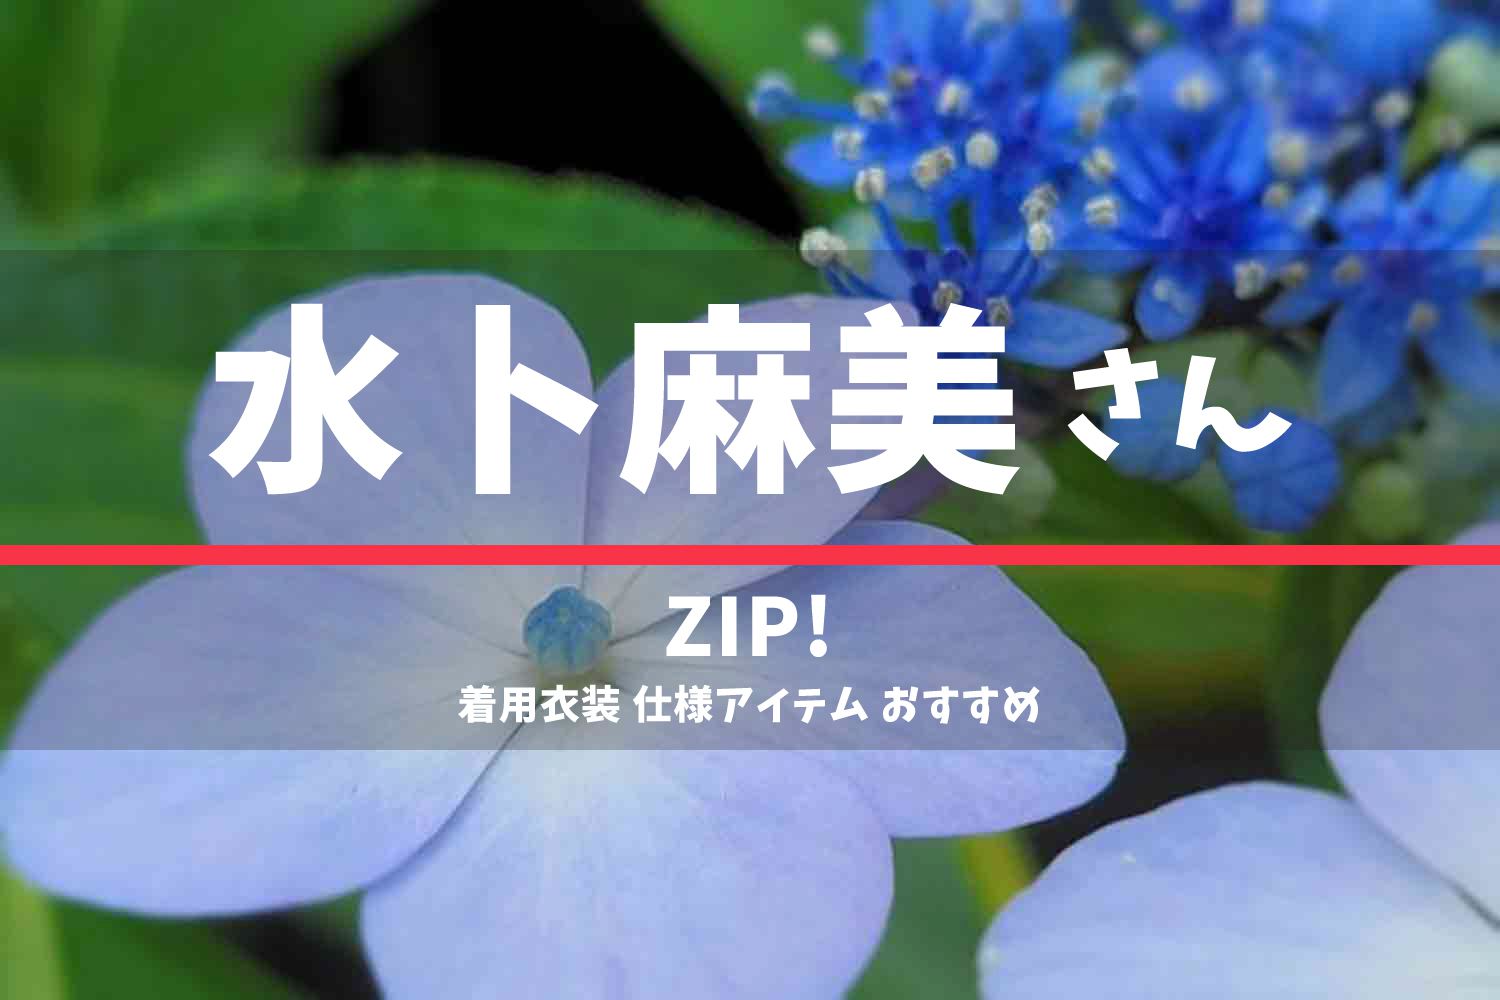 ZIP! 水卜麻美さん 番組 衣装 2022年7月8日放送